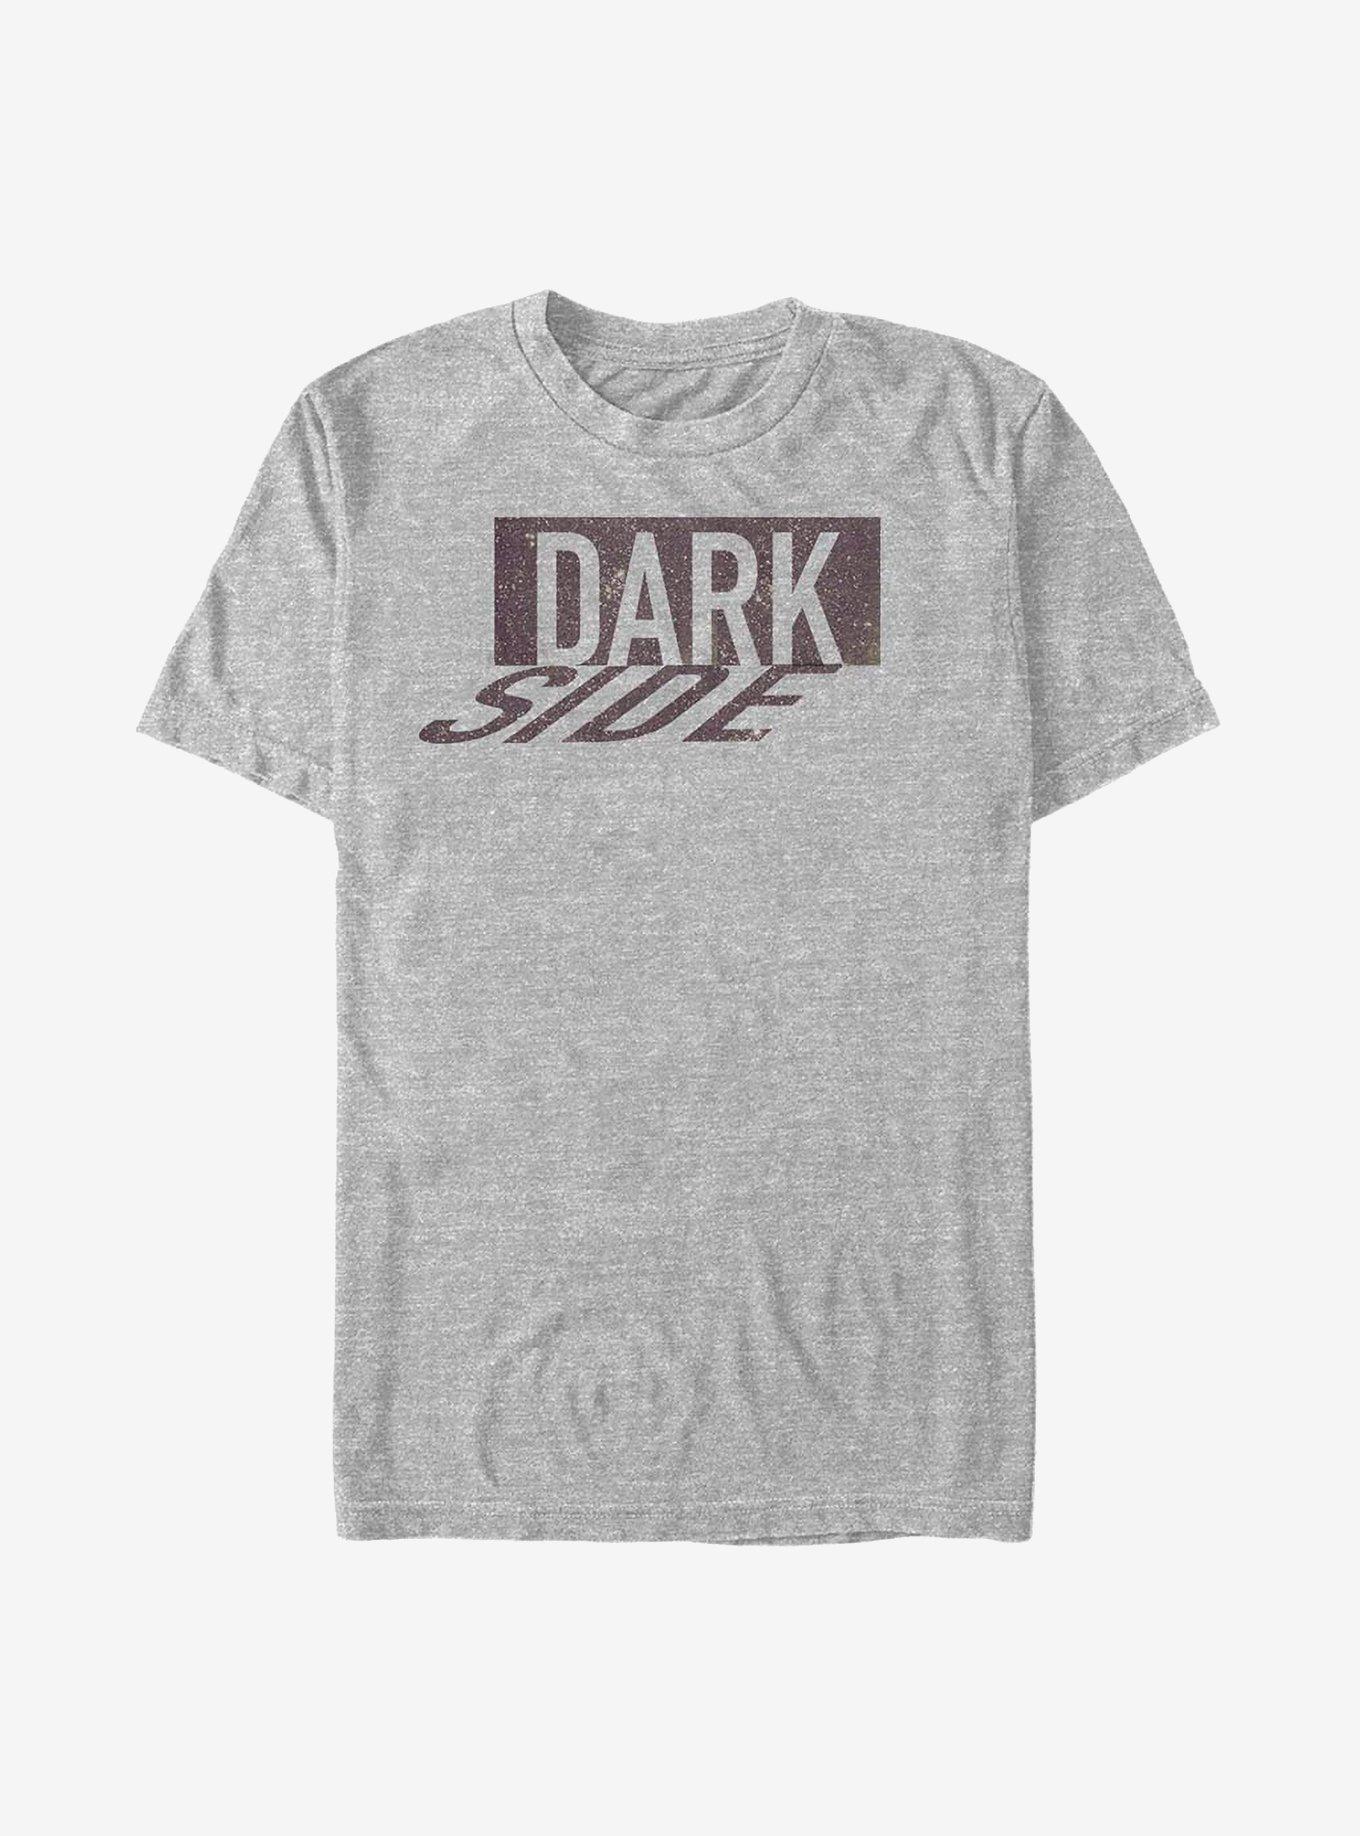 Star Wars Dark Shadow T-Shirt, , hi-res